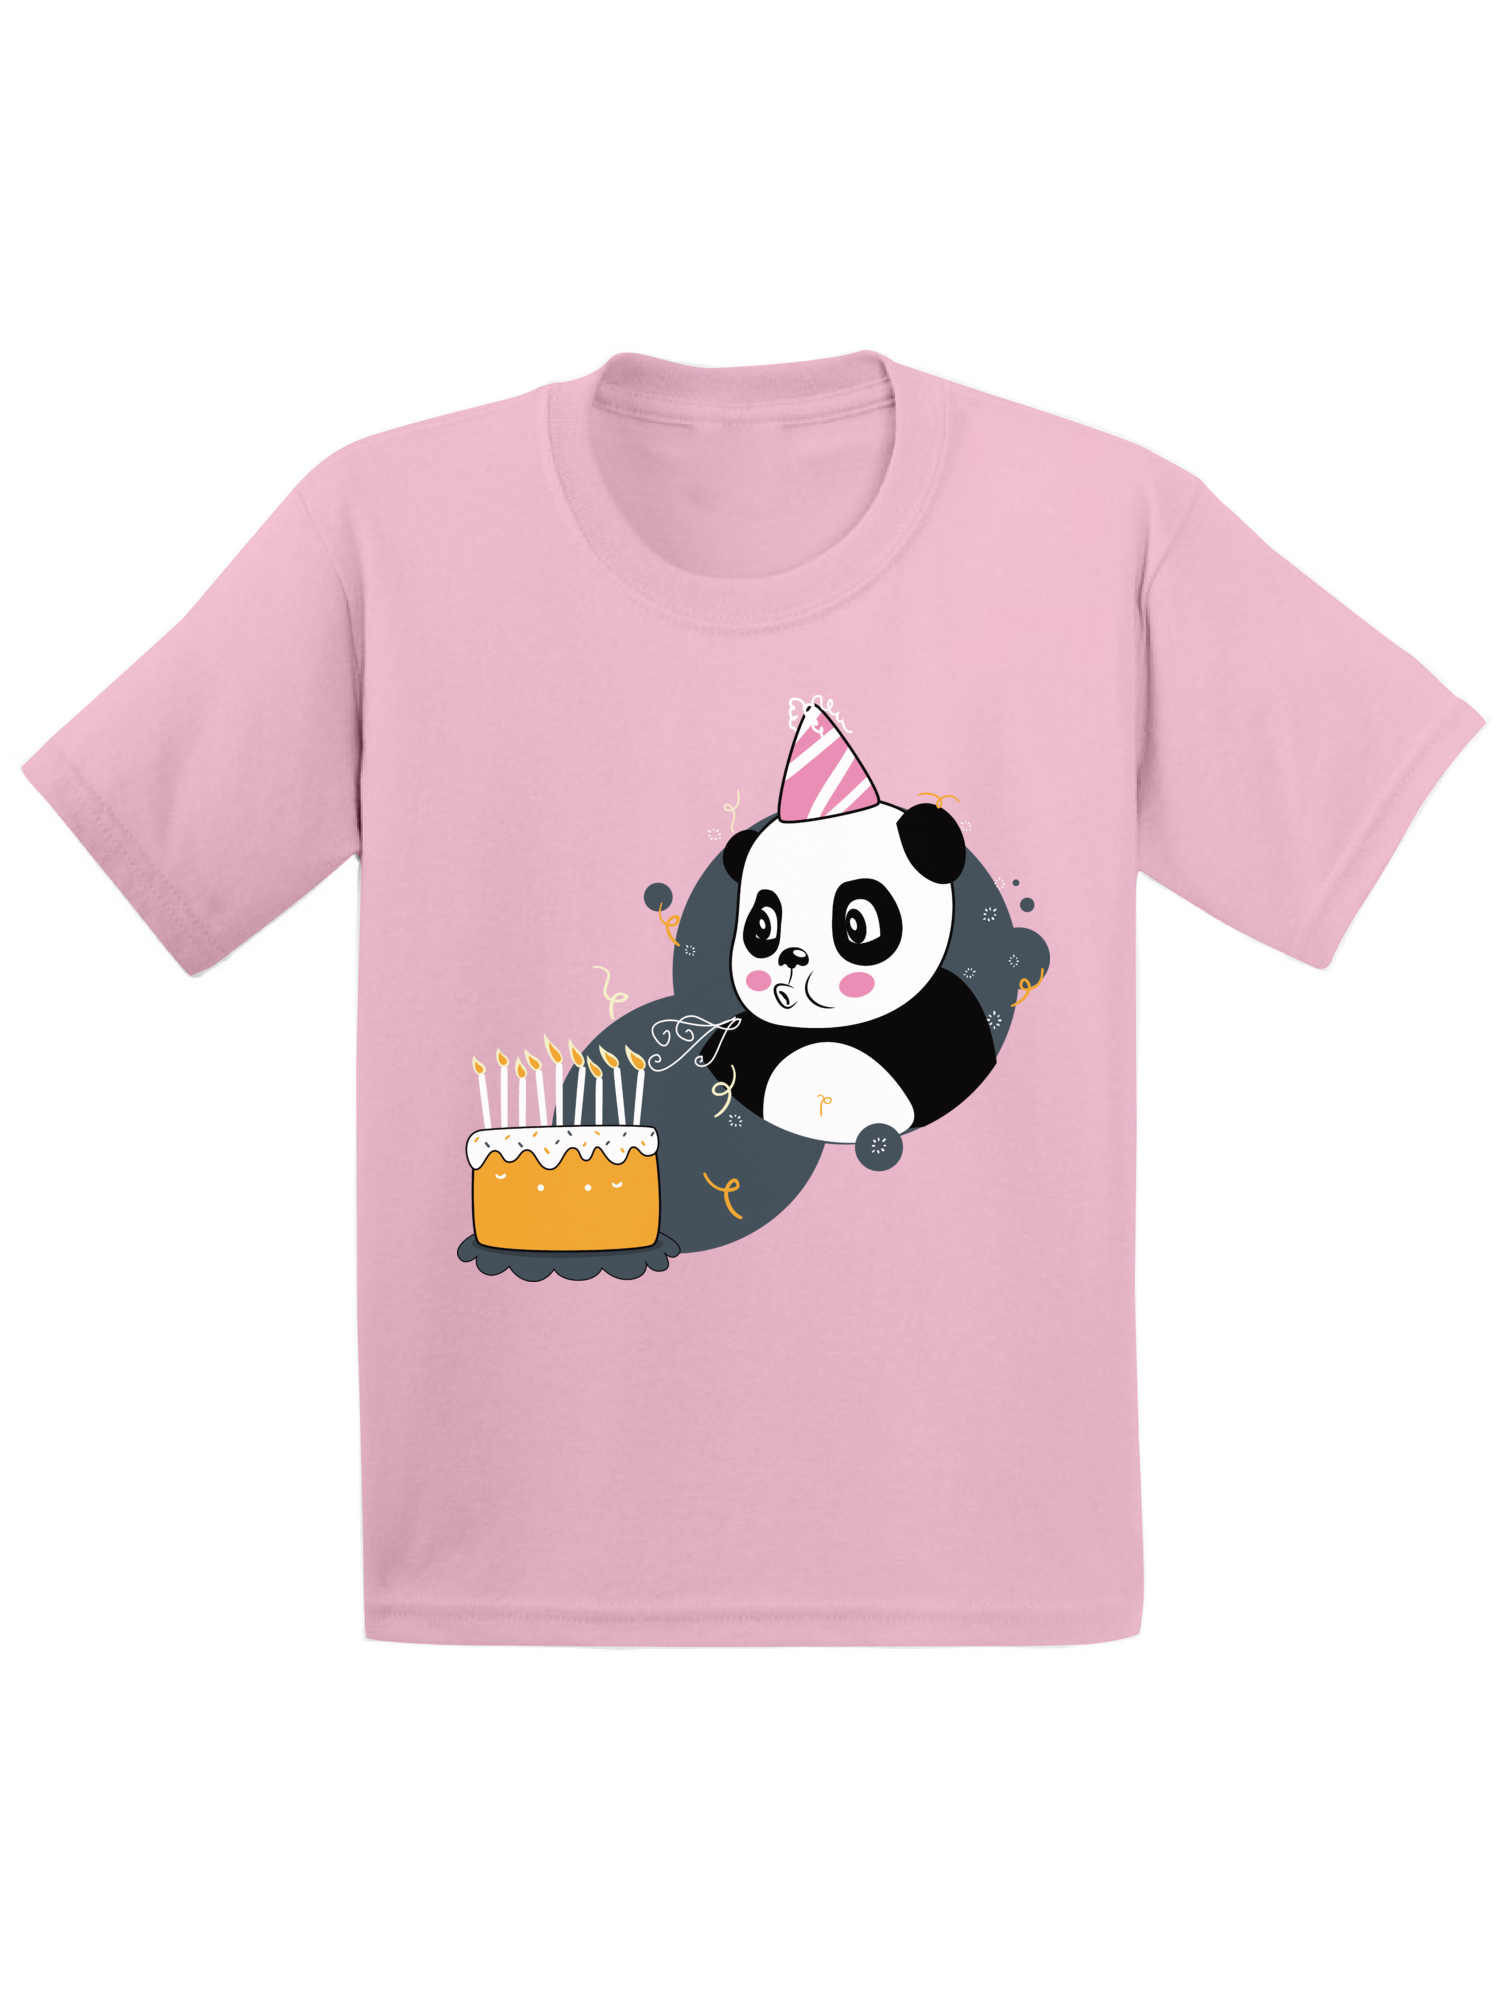 Awkward Styles Panda Birthday Toddler Shirt Kids Birthday Gifts Cute Panda Tshirt for Boy Cute Panda Tshirt for Girl Themed Party Birthday Boy Girl T shirt Funny Animal Lover Gifts for Kids - image 1 of 4